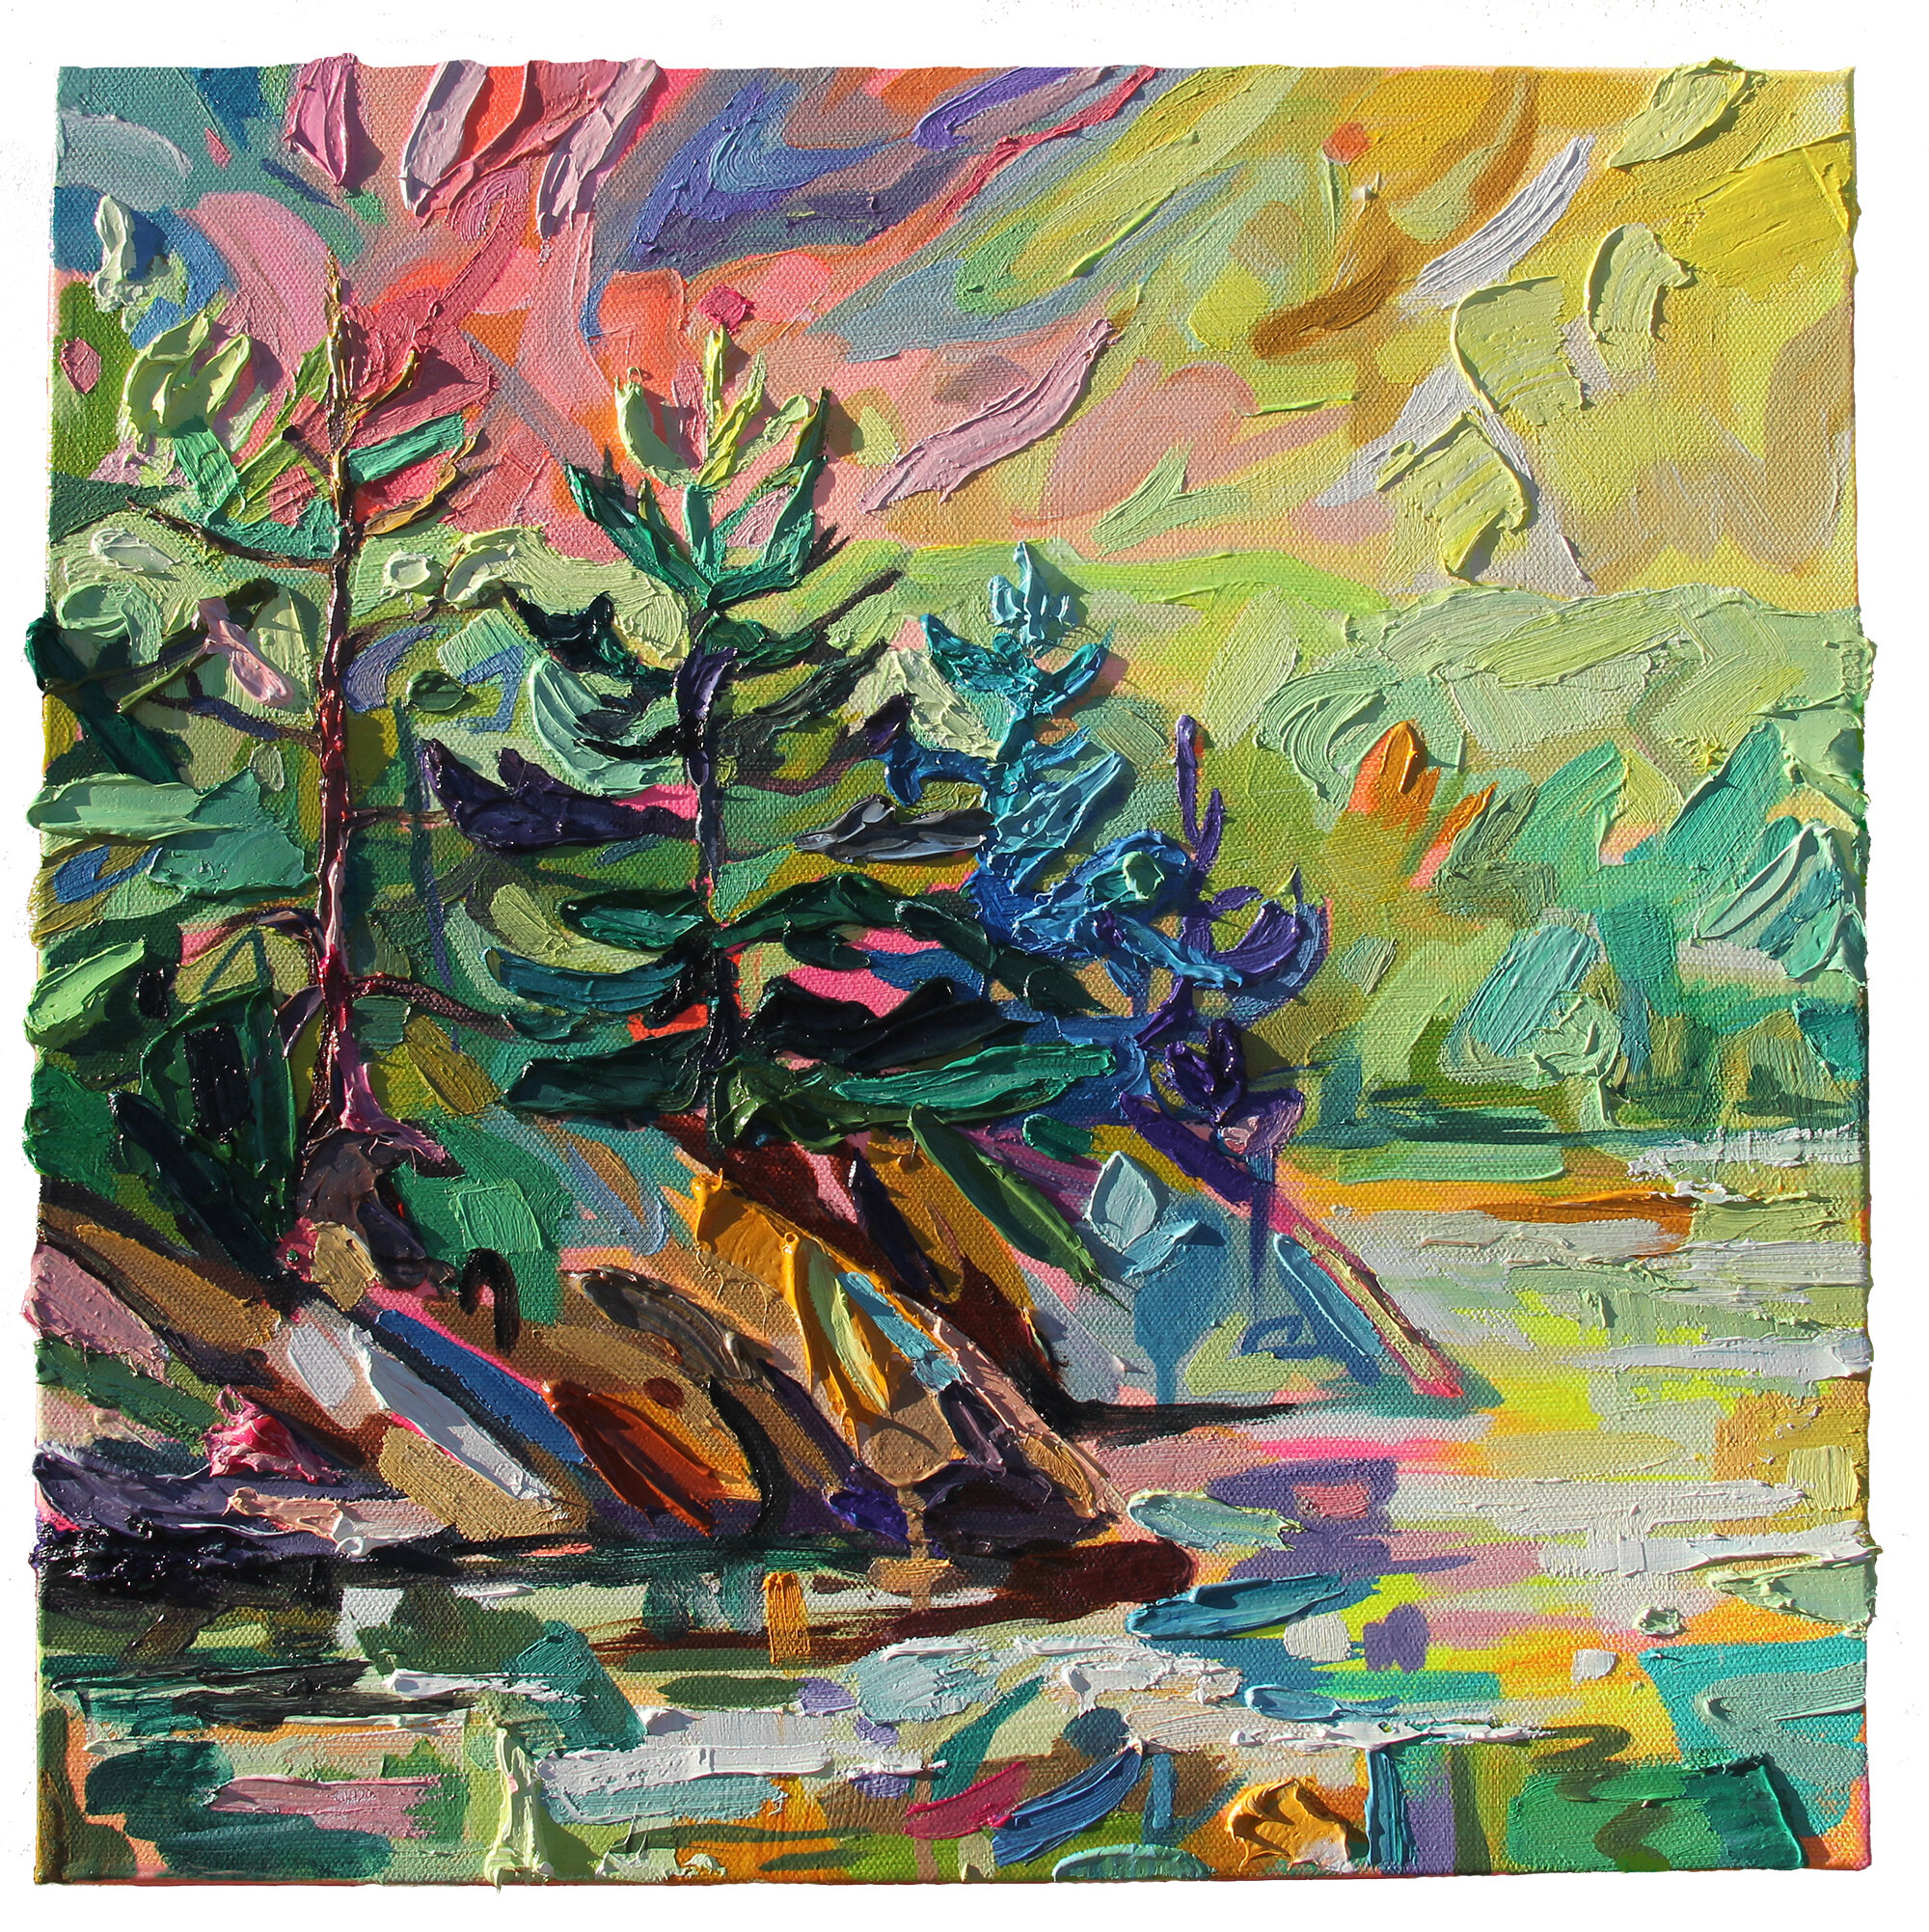 Mary Lake Magic, 16 x 16", oil and acrylic on canvas, 2021